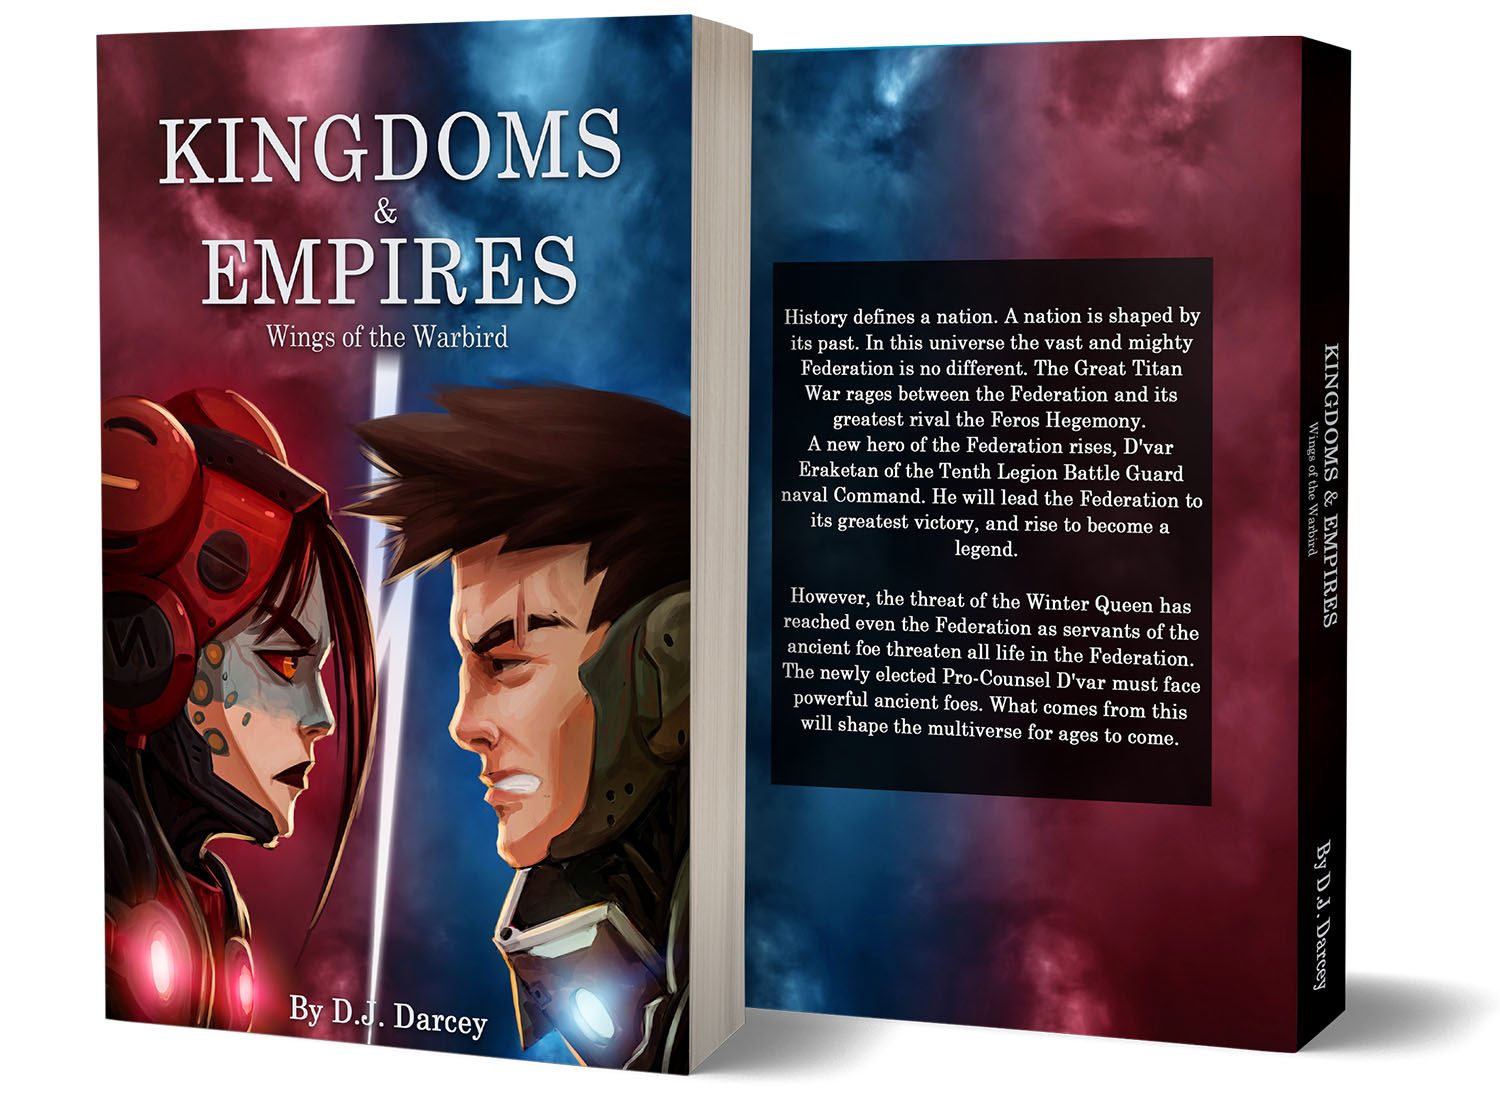 bookconsilio-portfolio-kingdomes-and-empires-paperback-bookcoverdesign